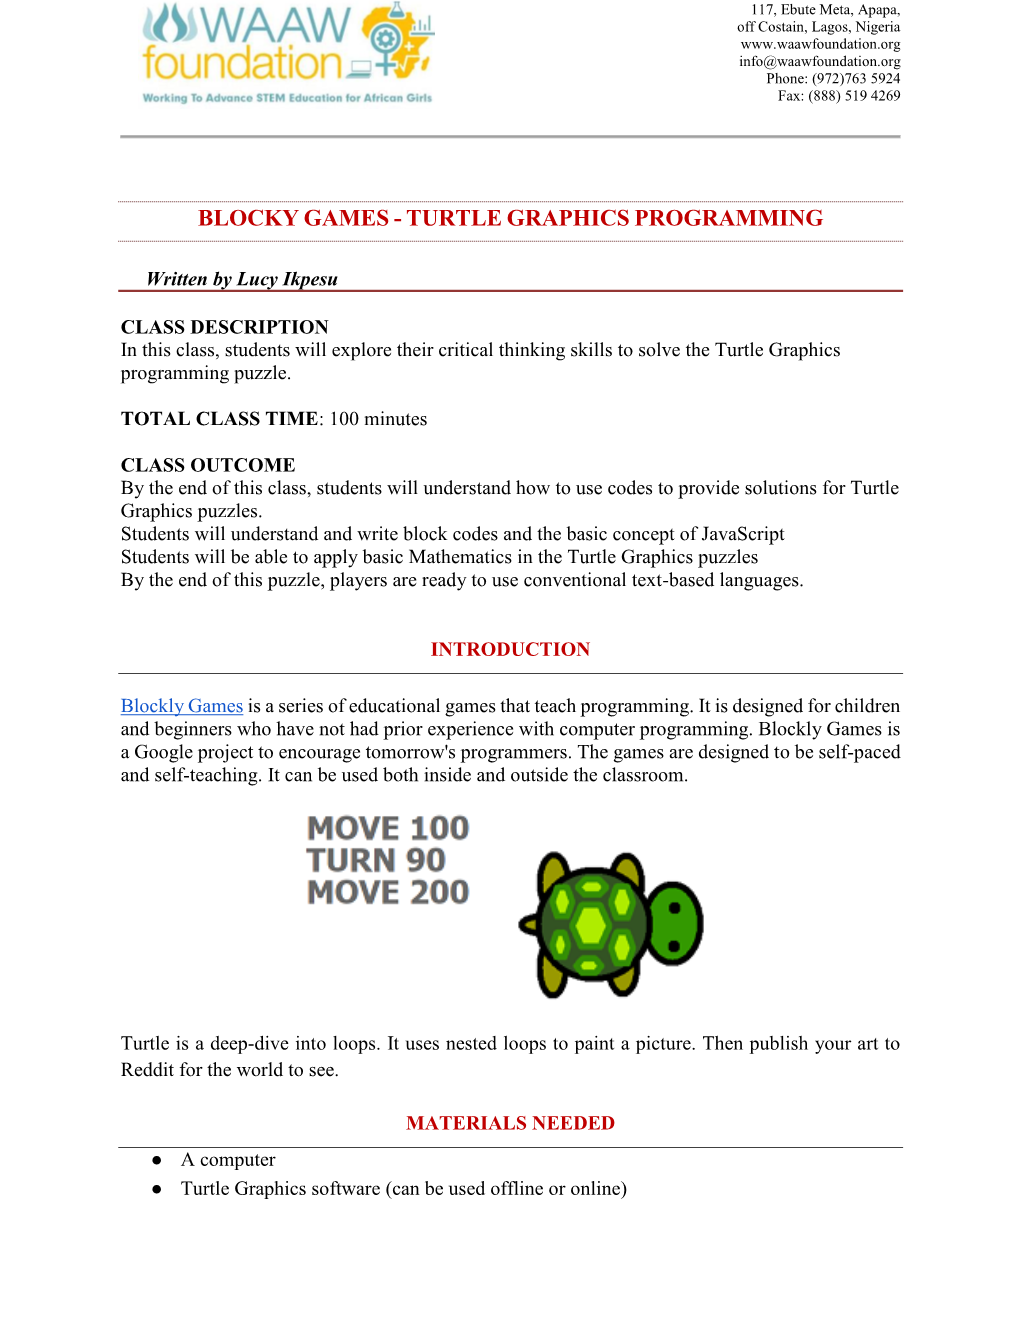 Blocky Games - Turtle Graphics Programming